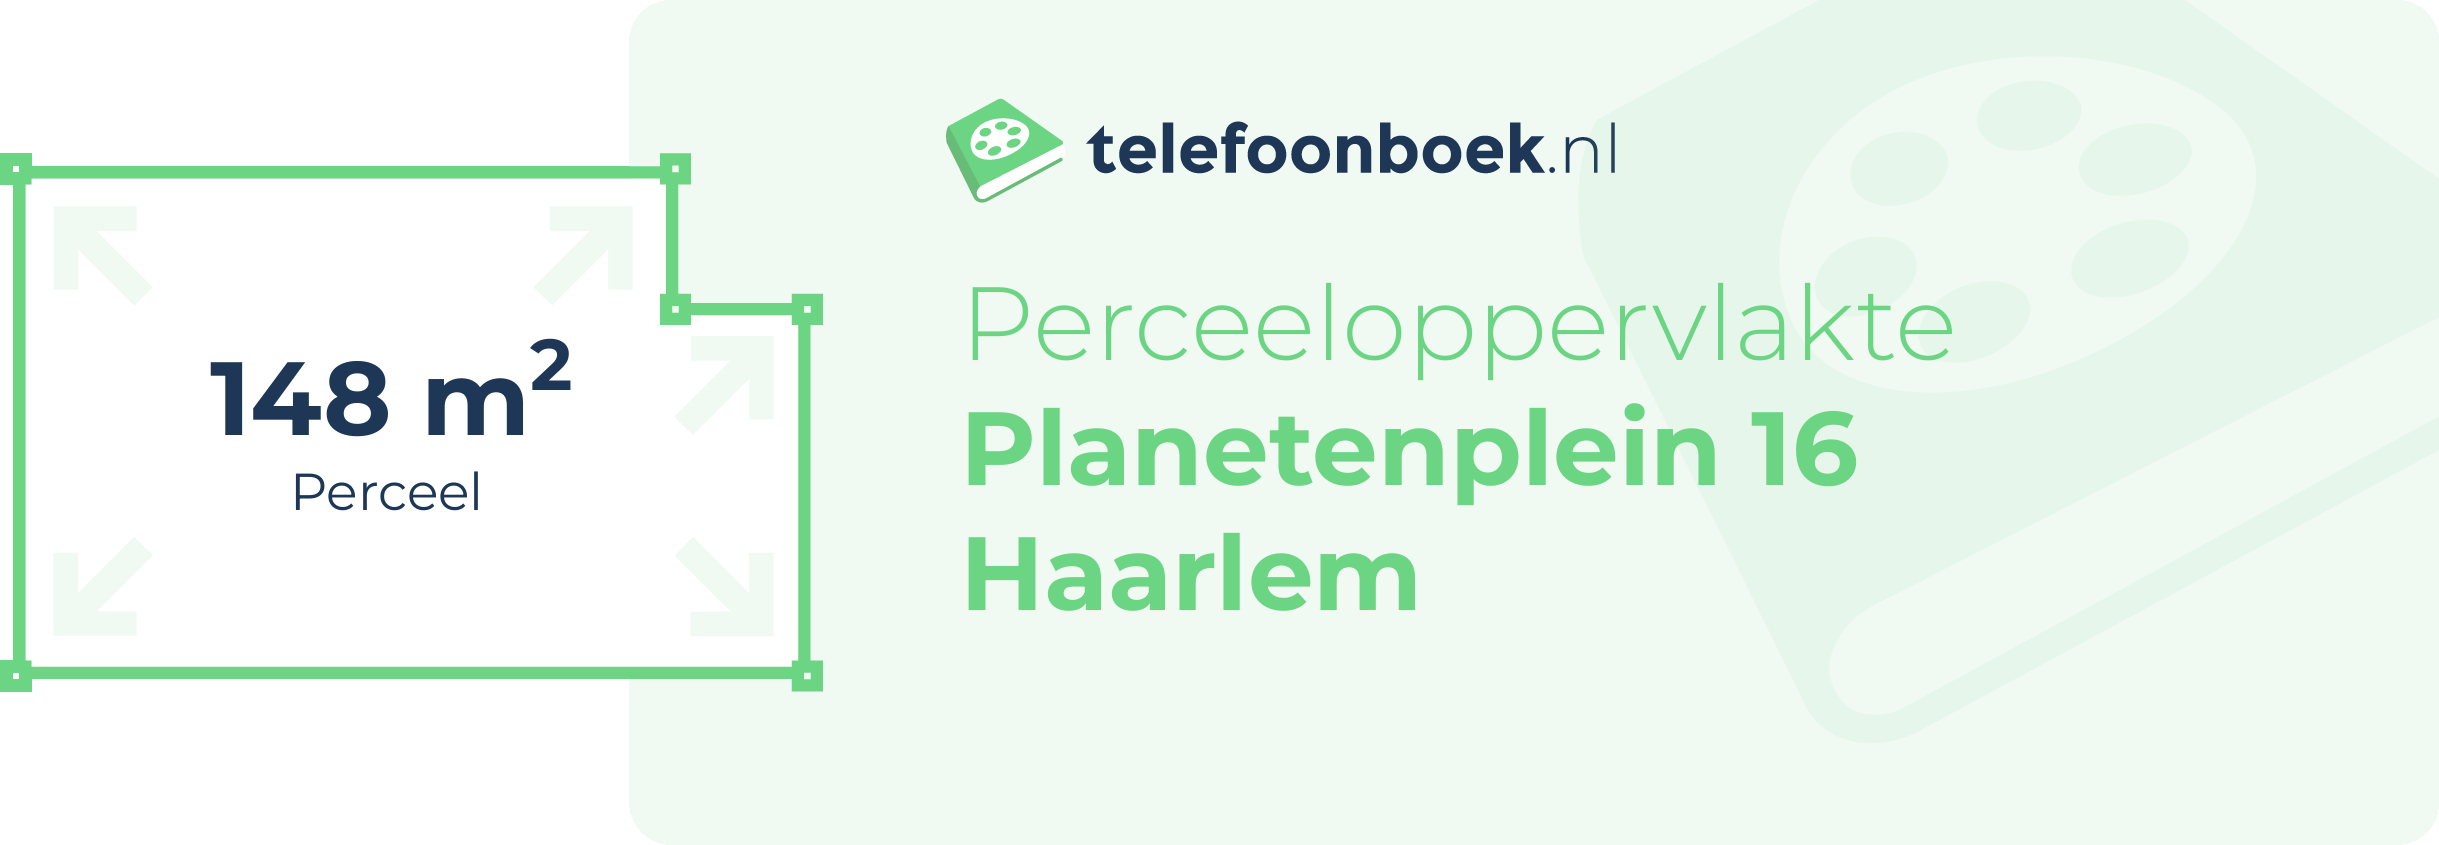 Perceeloppervlakte Planetenplein 16 Haarlem